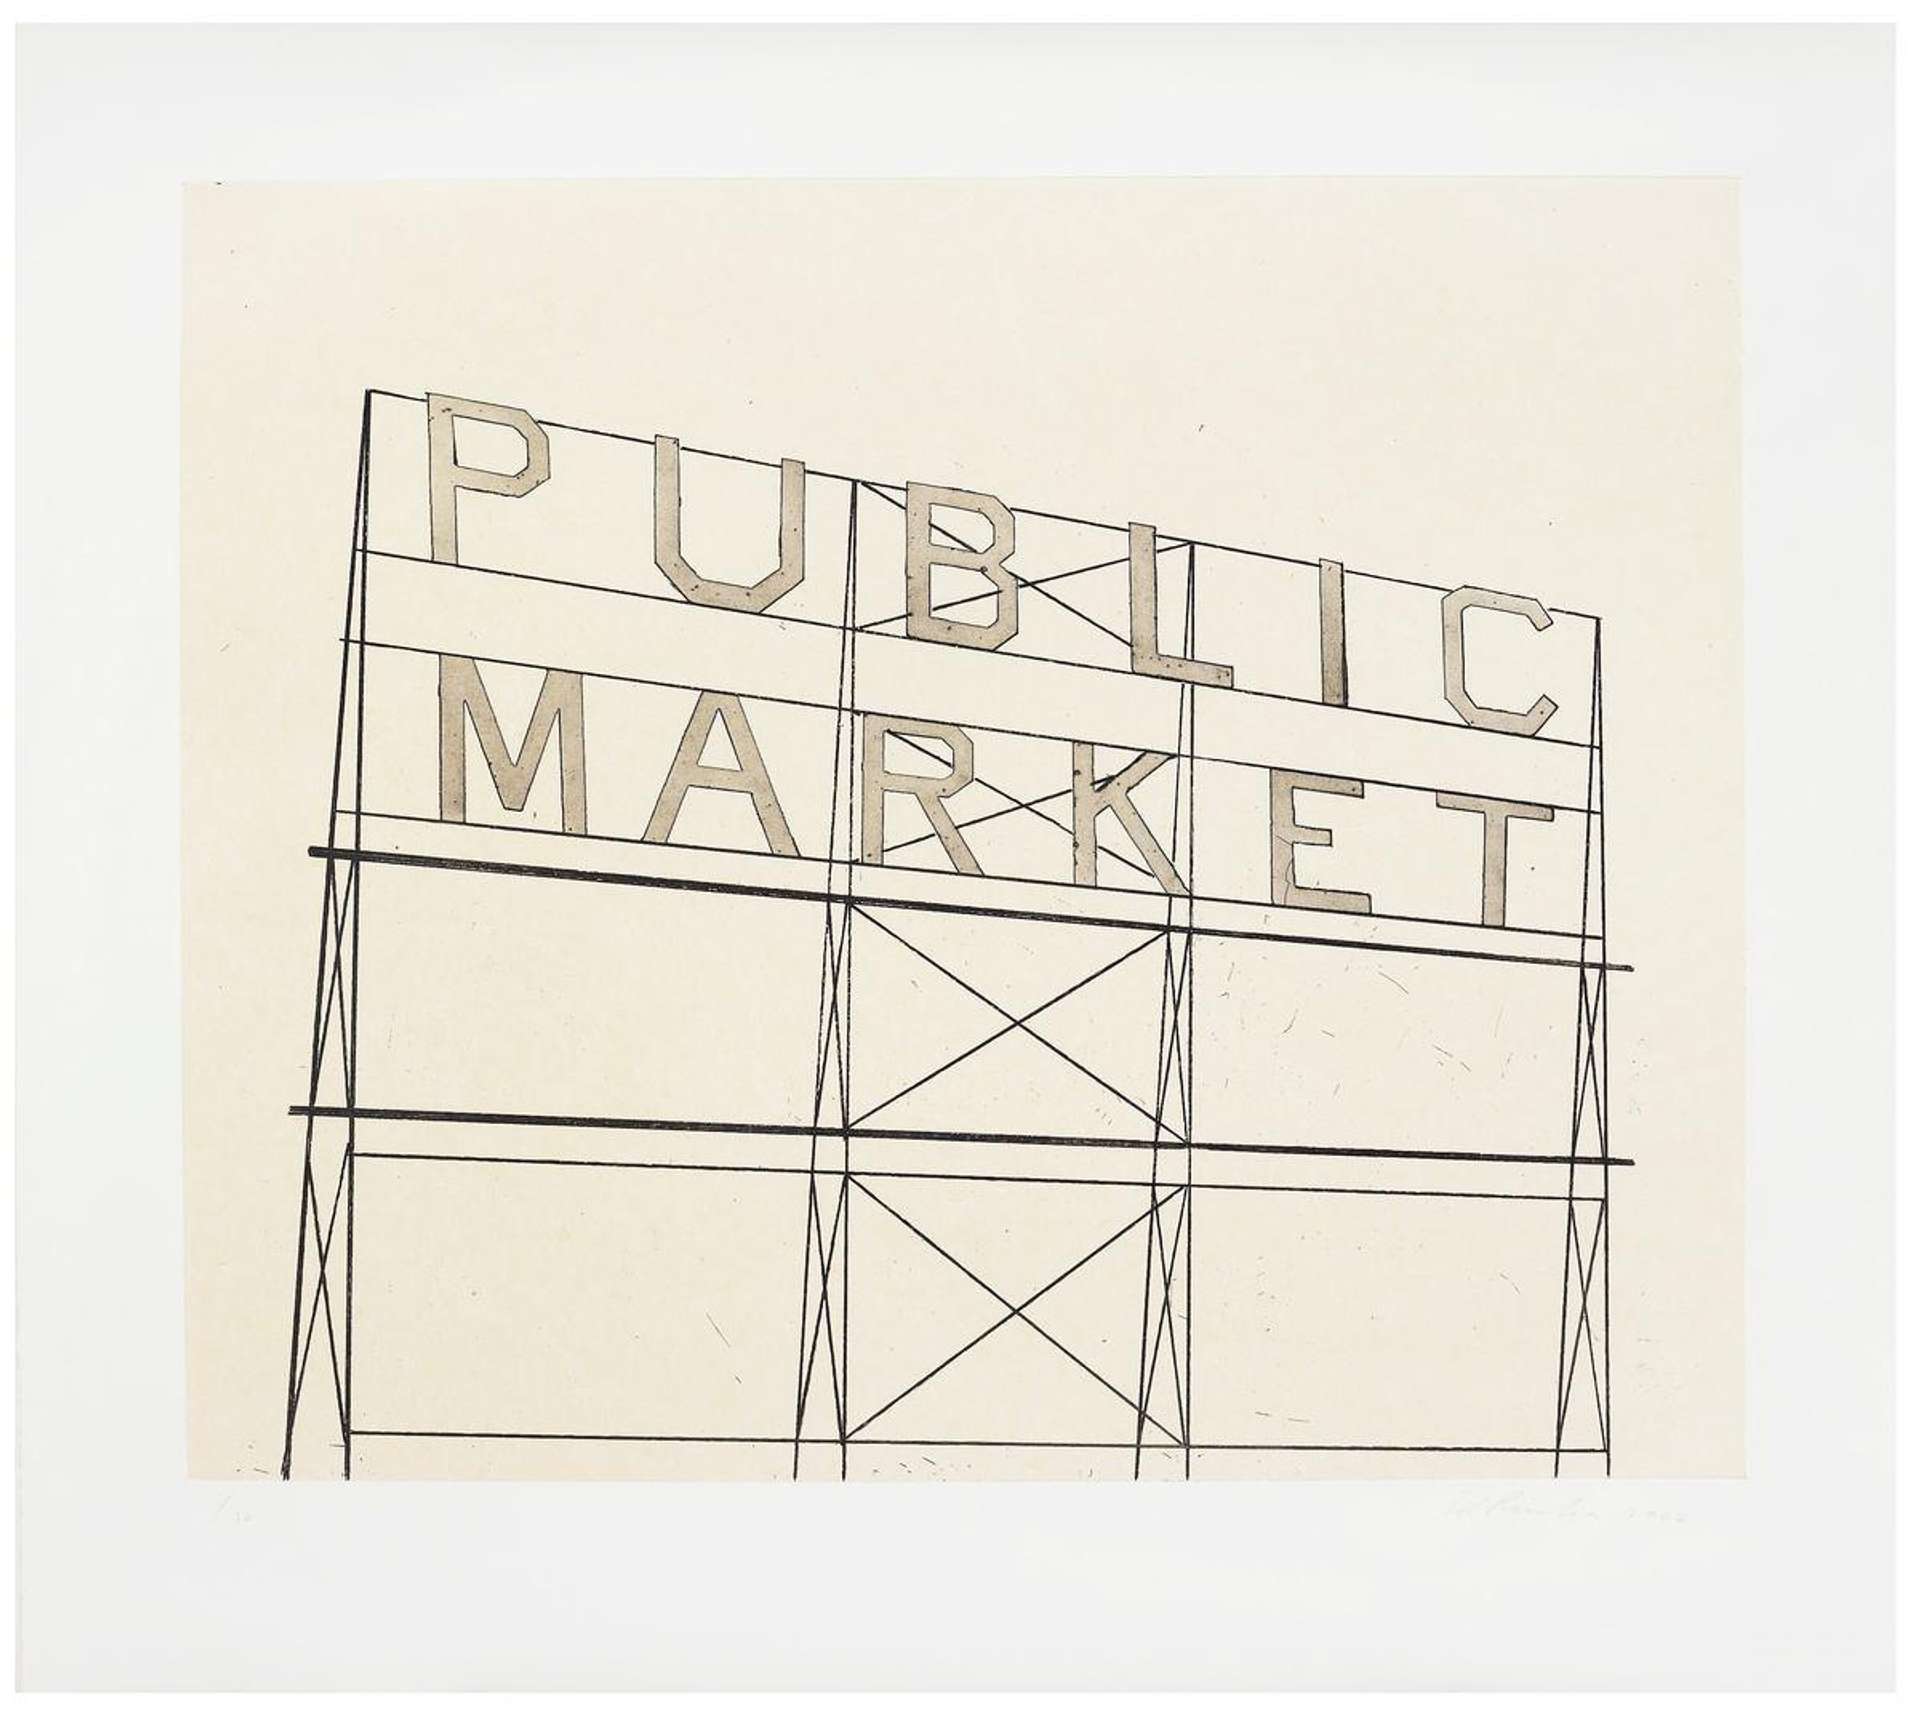  Public Market by Ed Ruscha